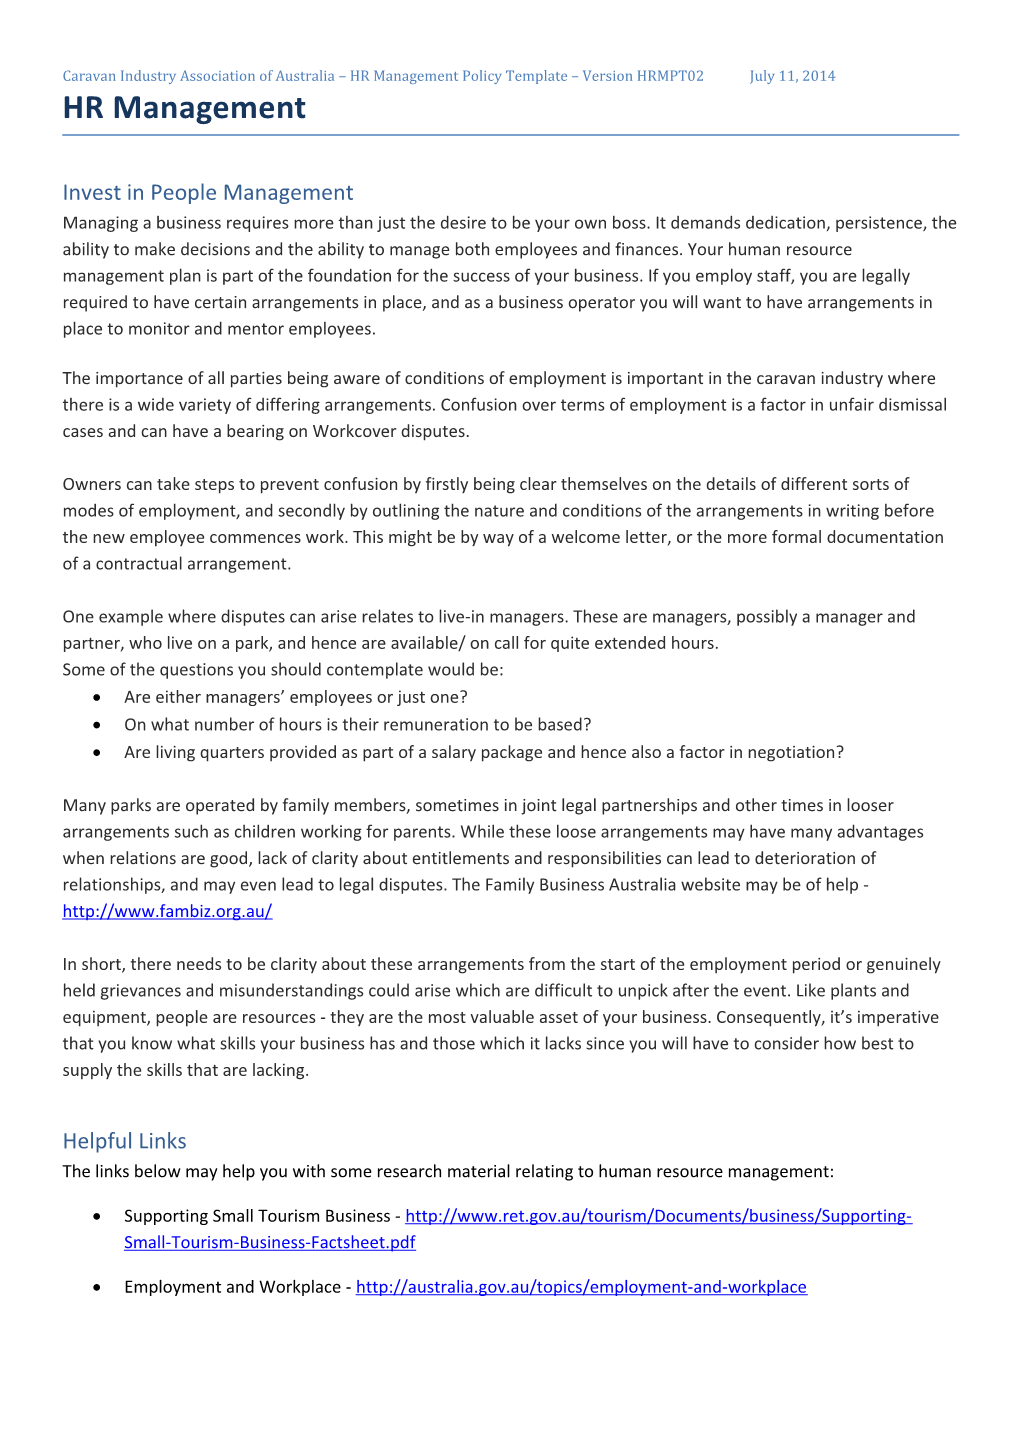 Caravan Industry Association of Australia HR Management Policy Template Version HRMPT02